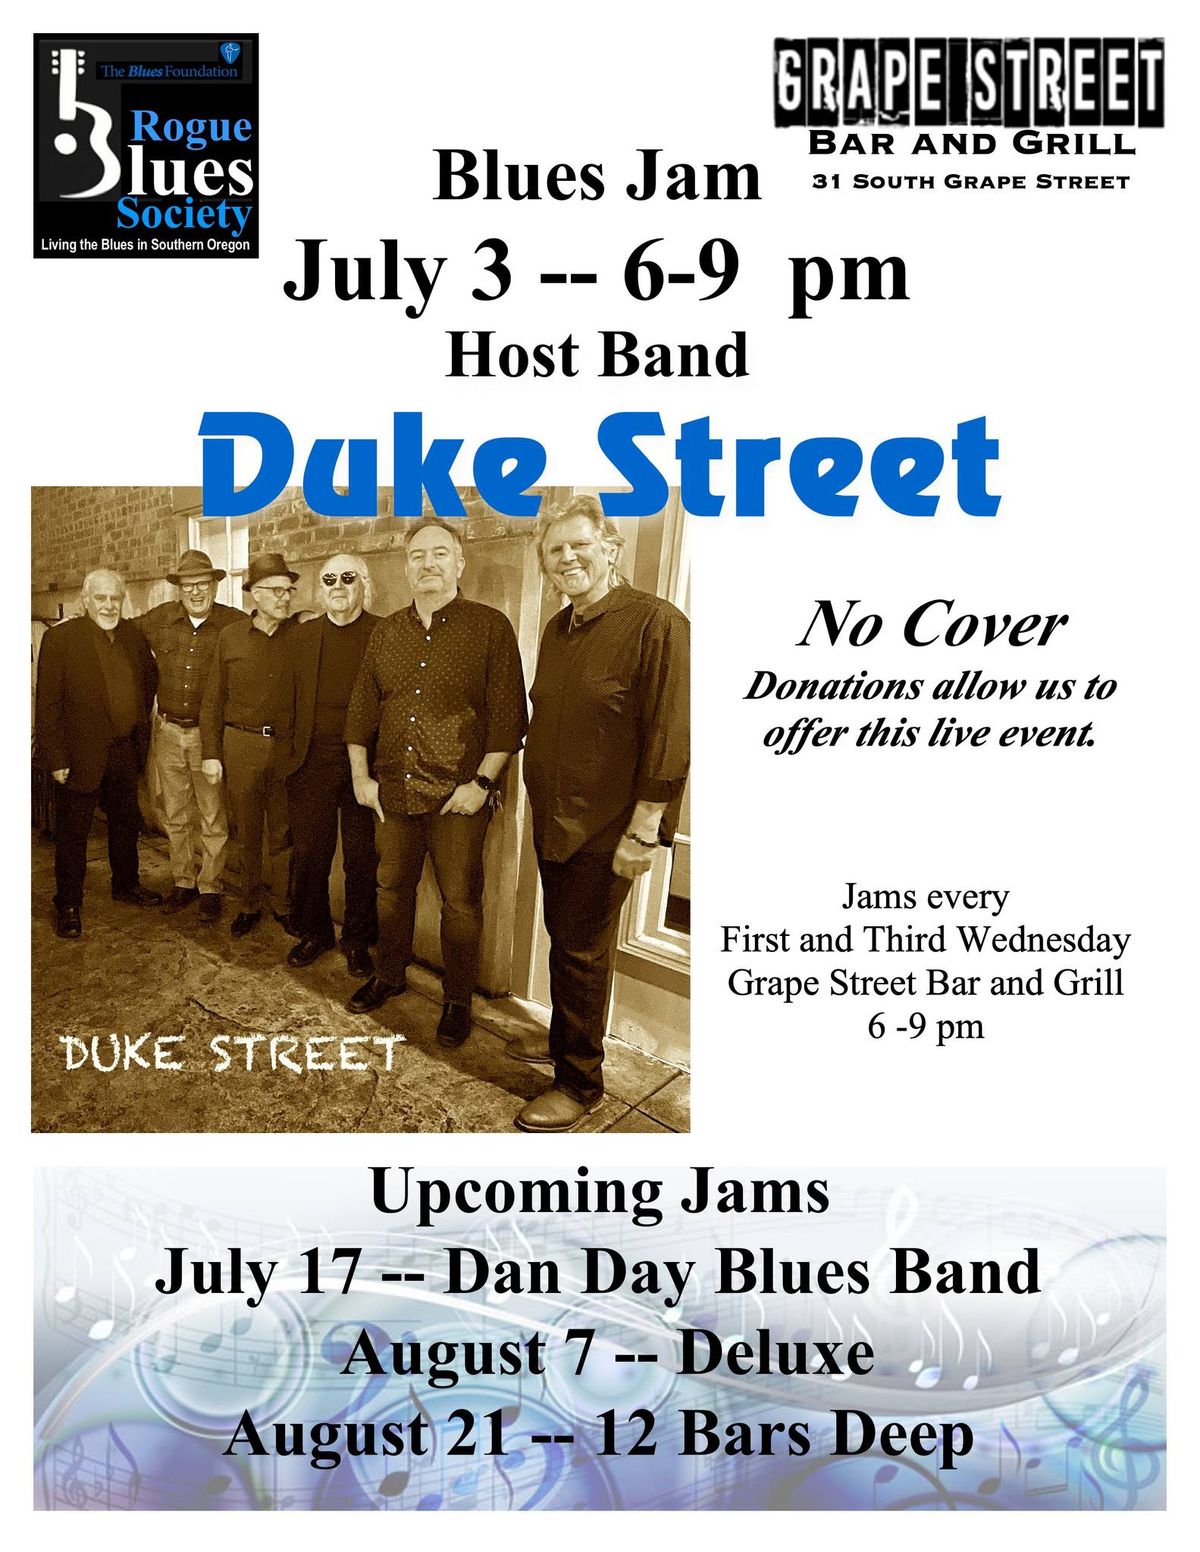 July 3rd Blues Jam